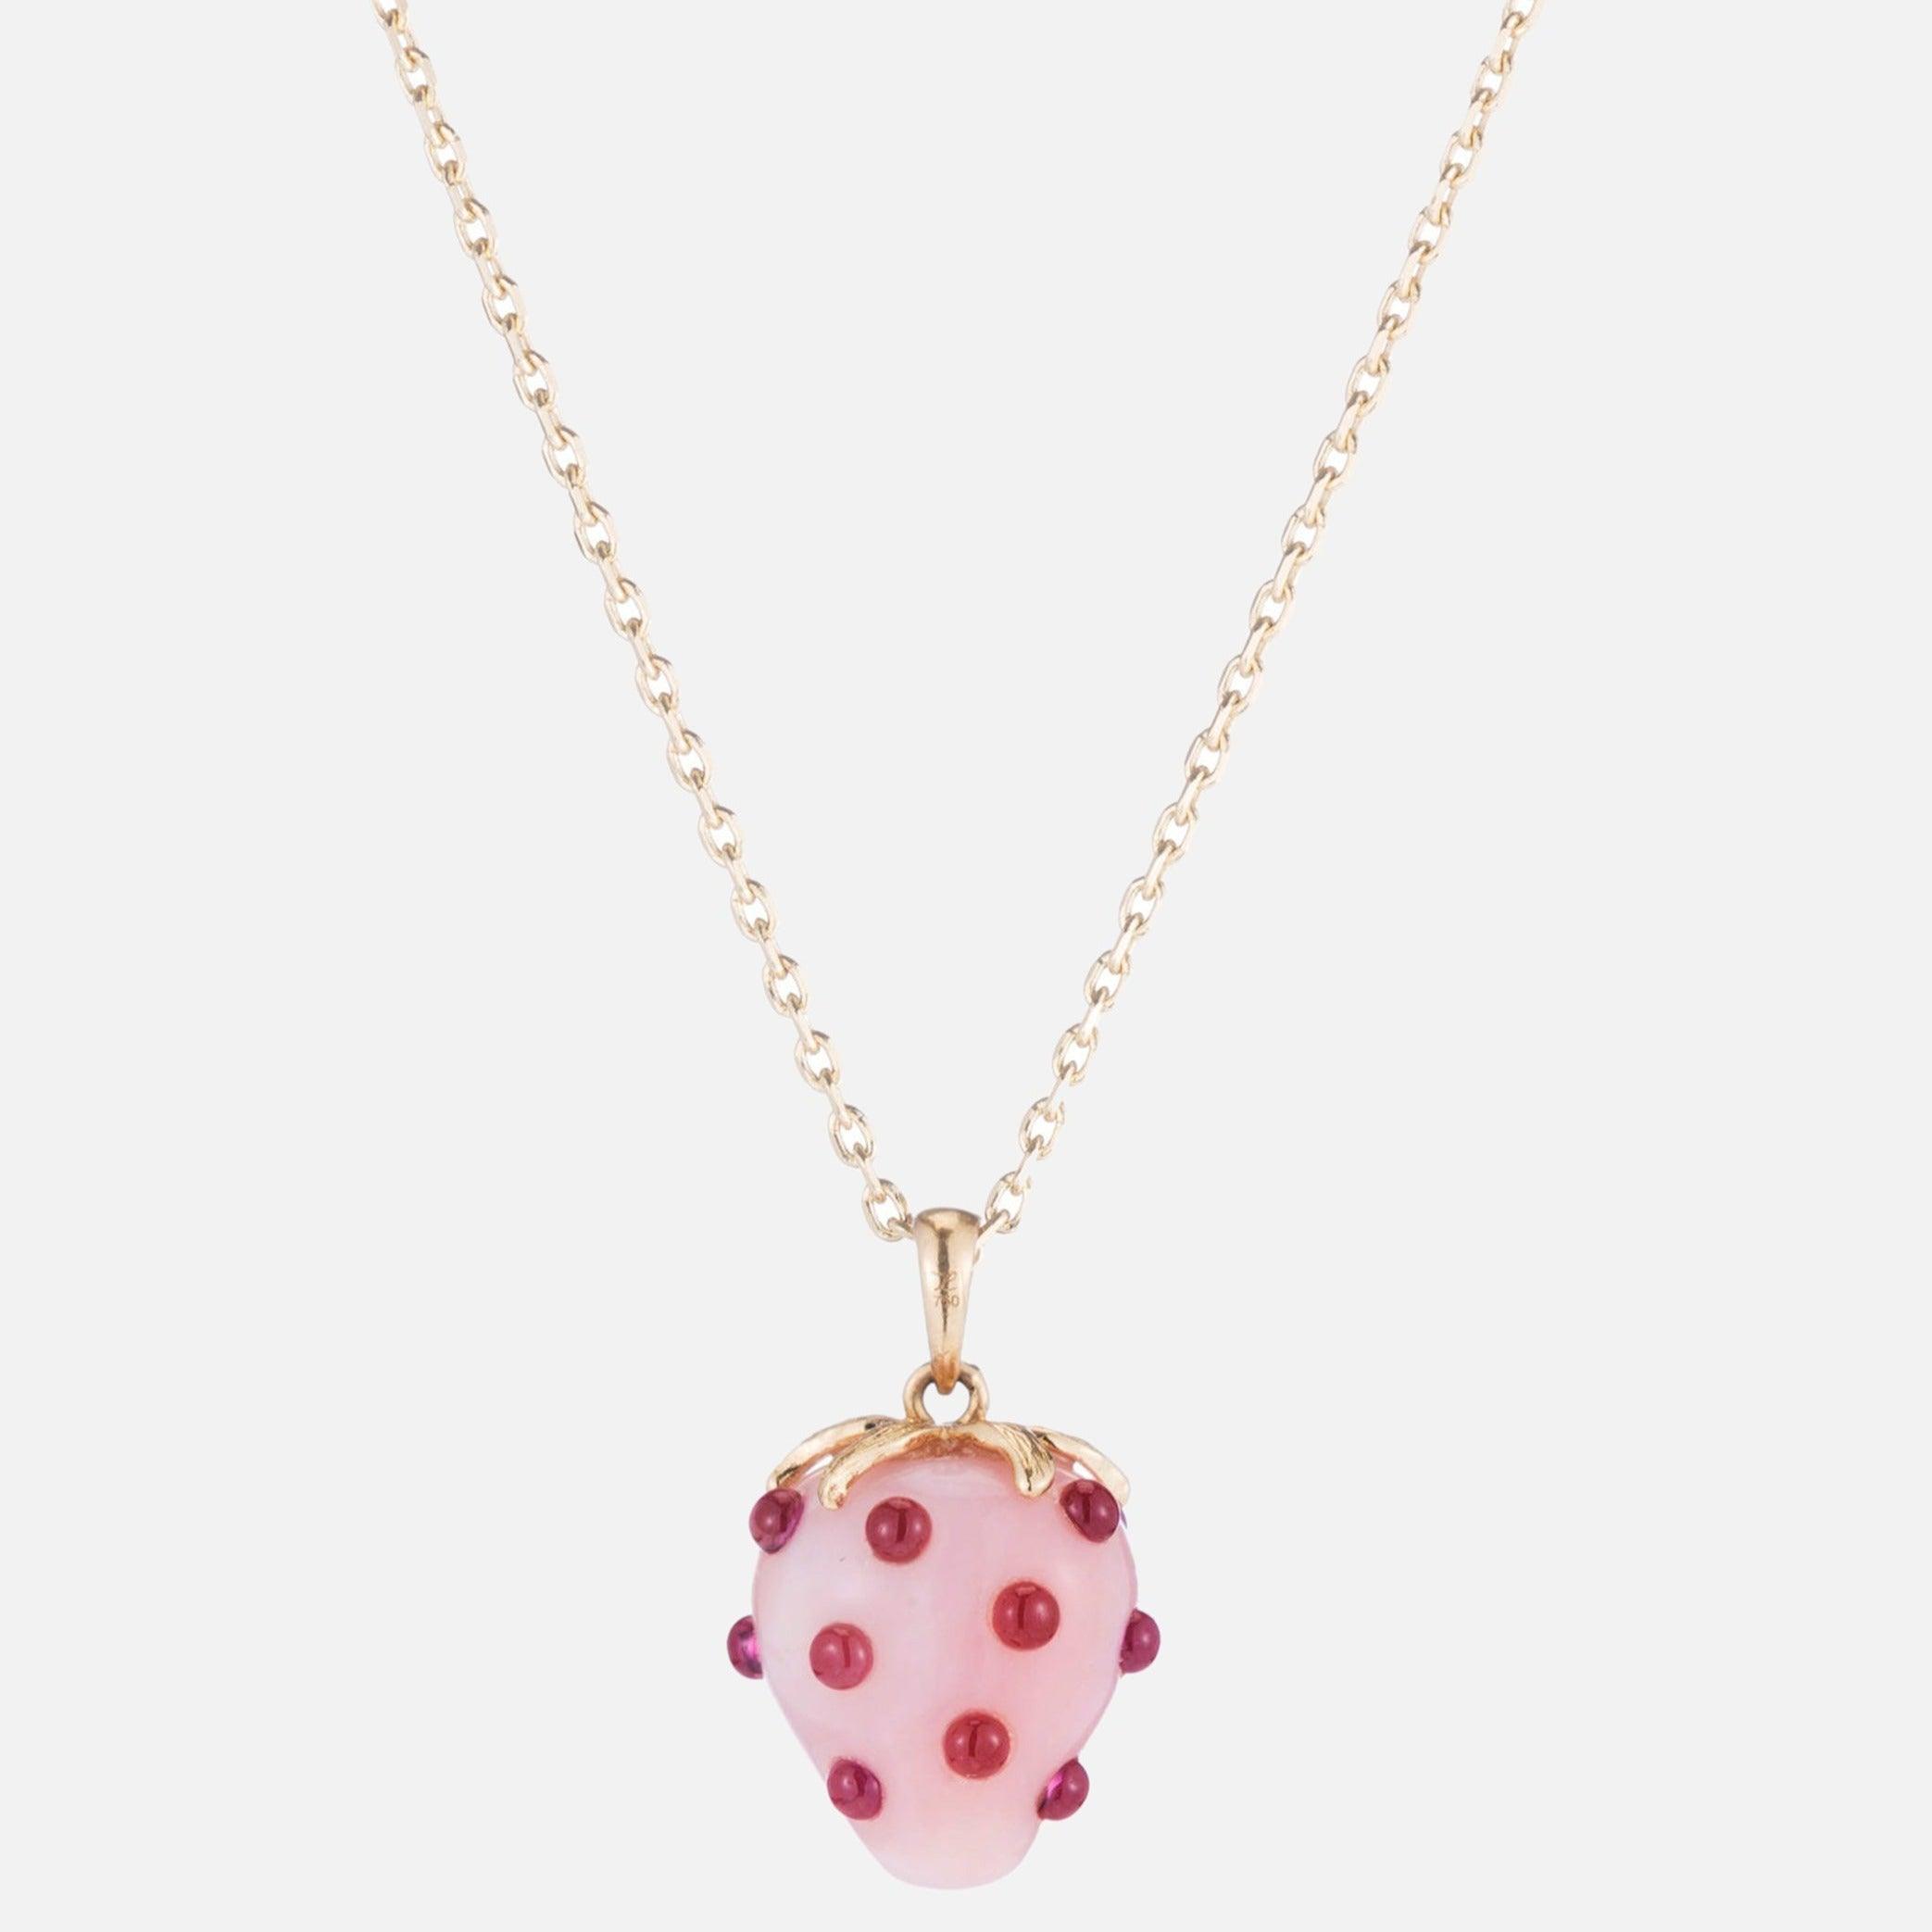 Strawberry Opal Pendant - Ariel Gordon Jewelry - At Present